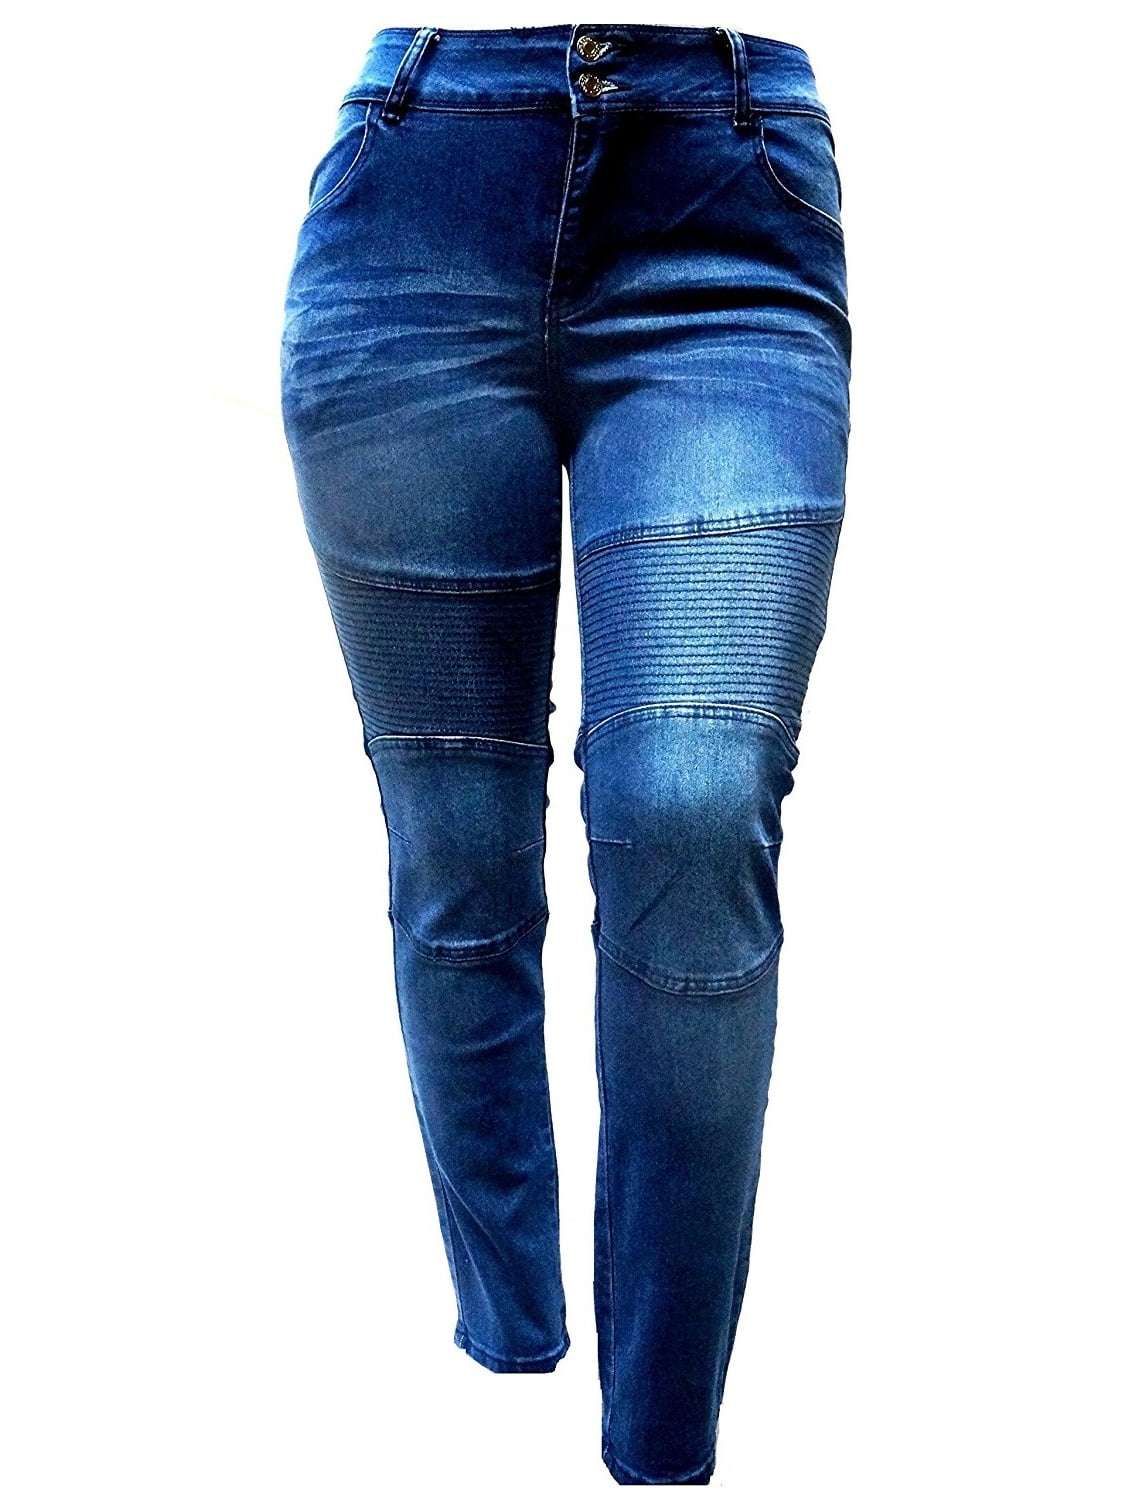 moto jeans for women